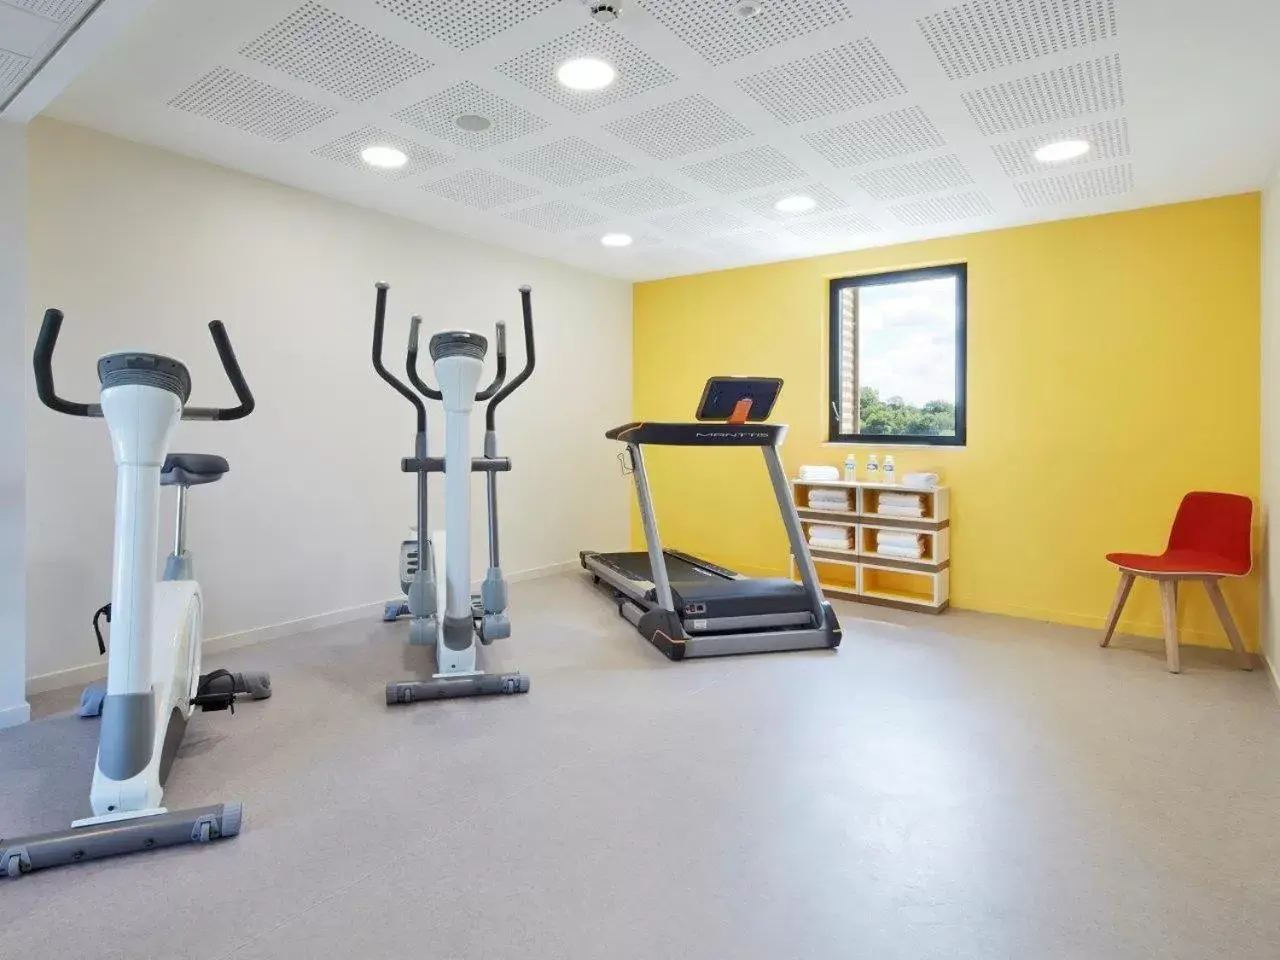 Fitness centre/facilities, Fitness Center/Facilities in Kyriad Prestige Pau – Palais des Sports